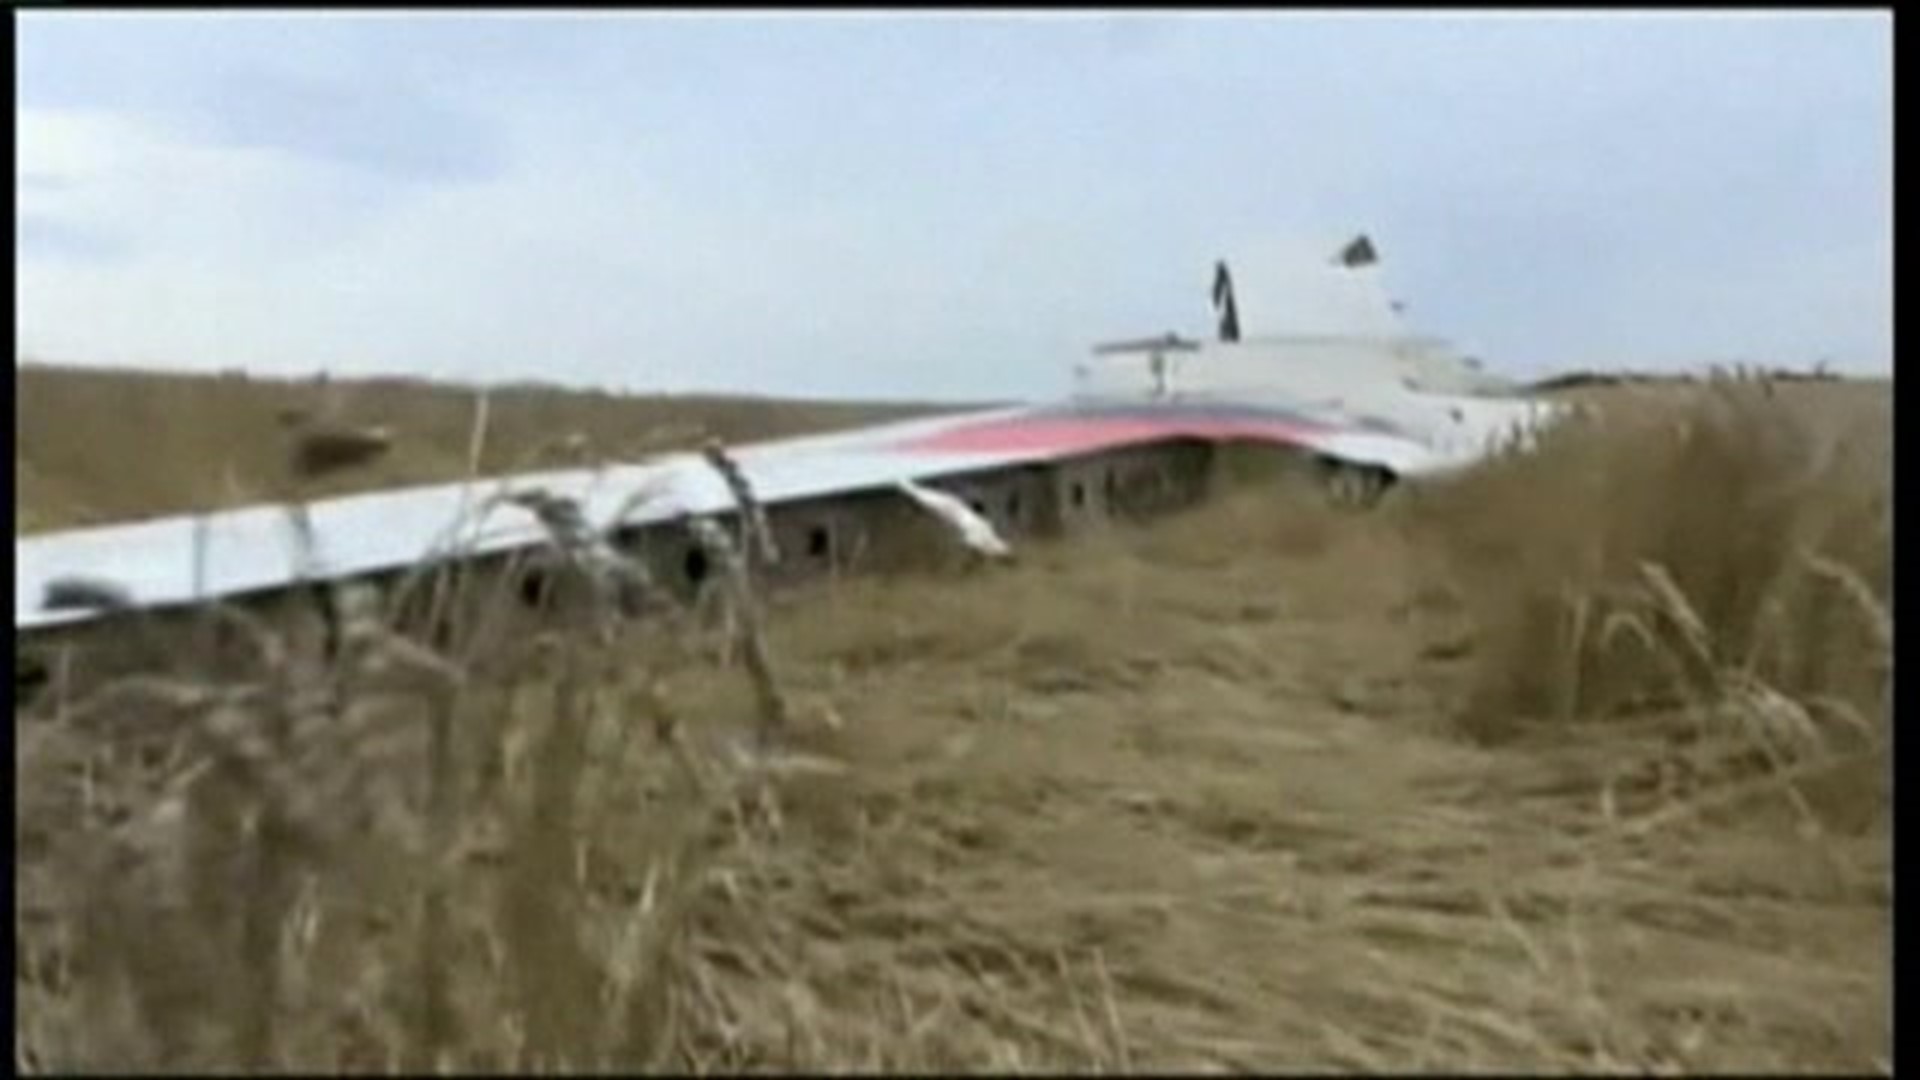 Local Reaction to Ukrainian Plane Crash